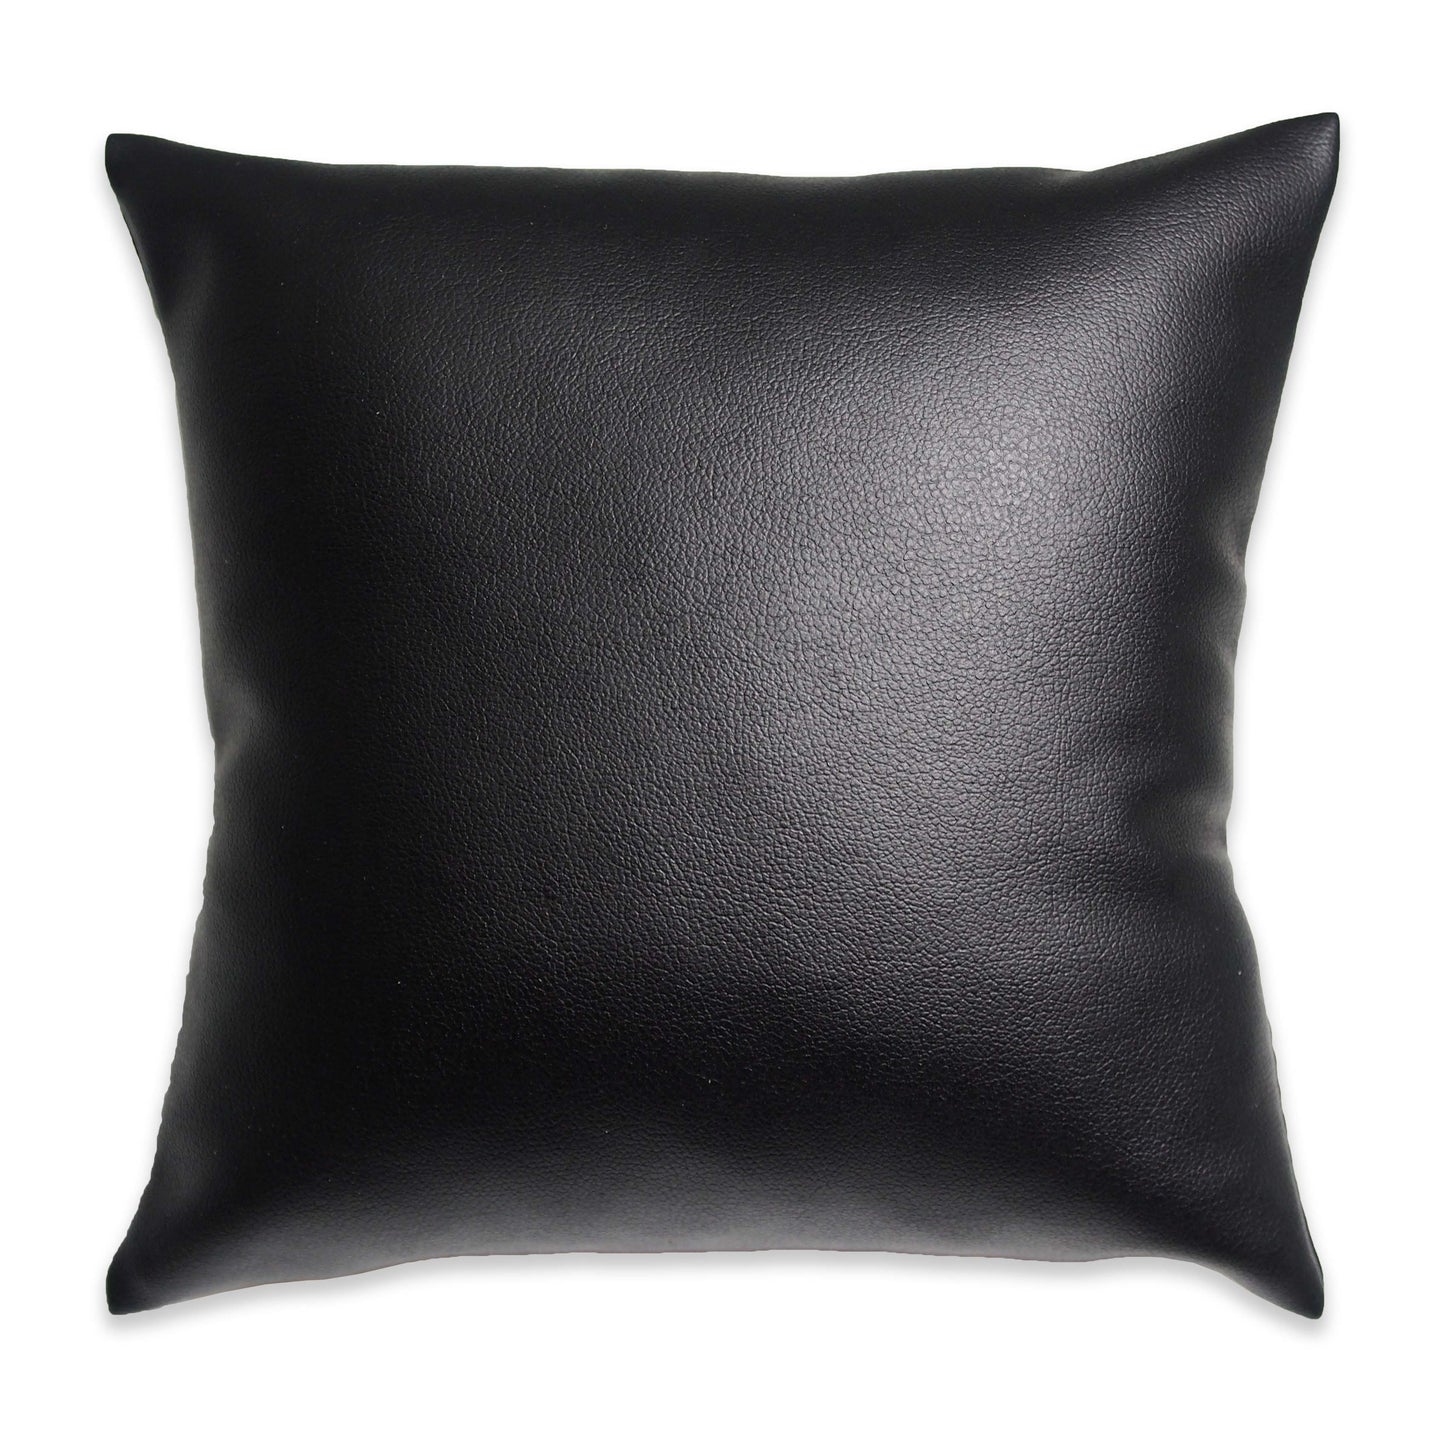 5" Black Leatherette Pillow Displays